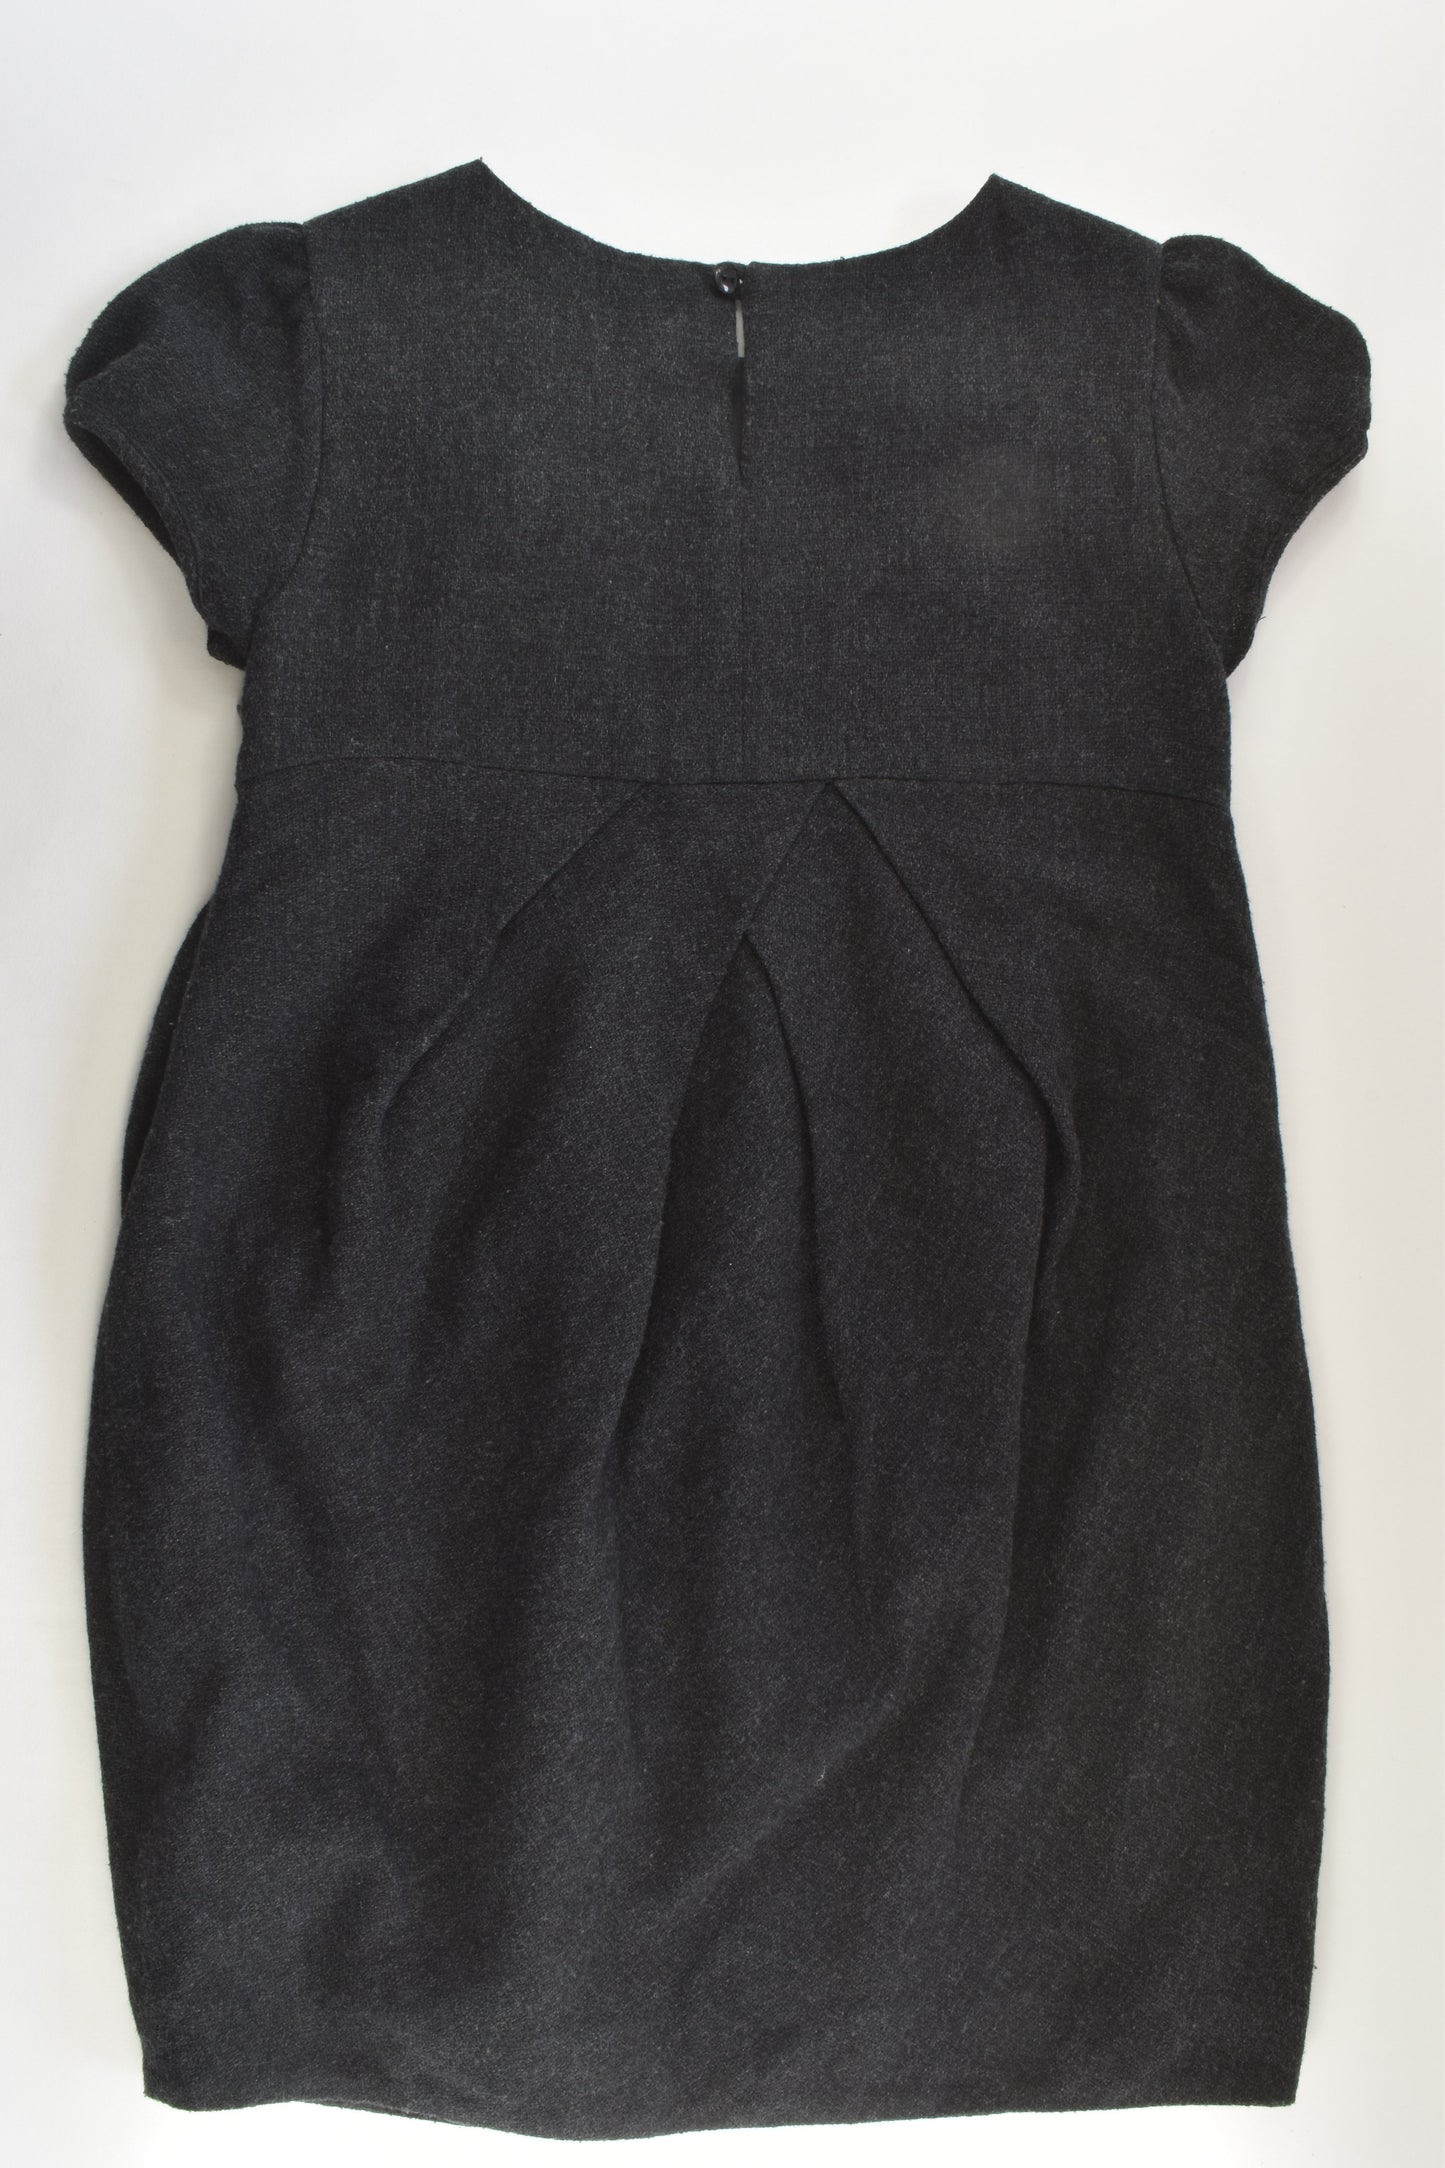 Zara Size 7-8 (128 cm) Lined Winter Dress